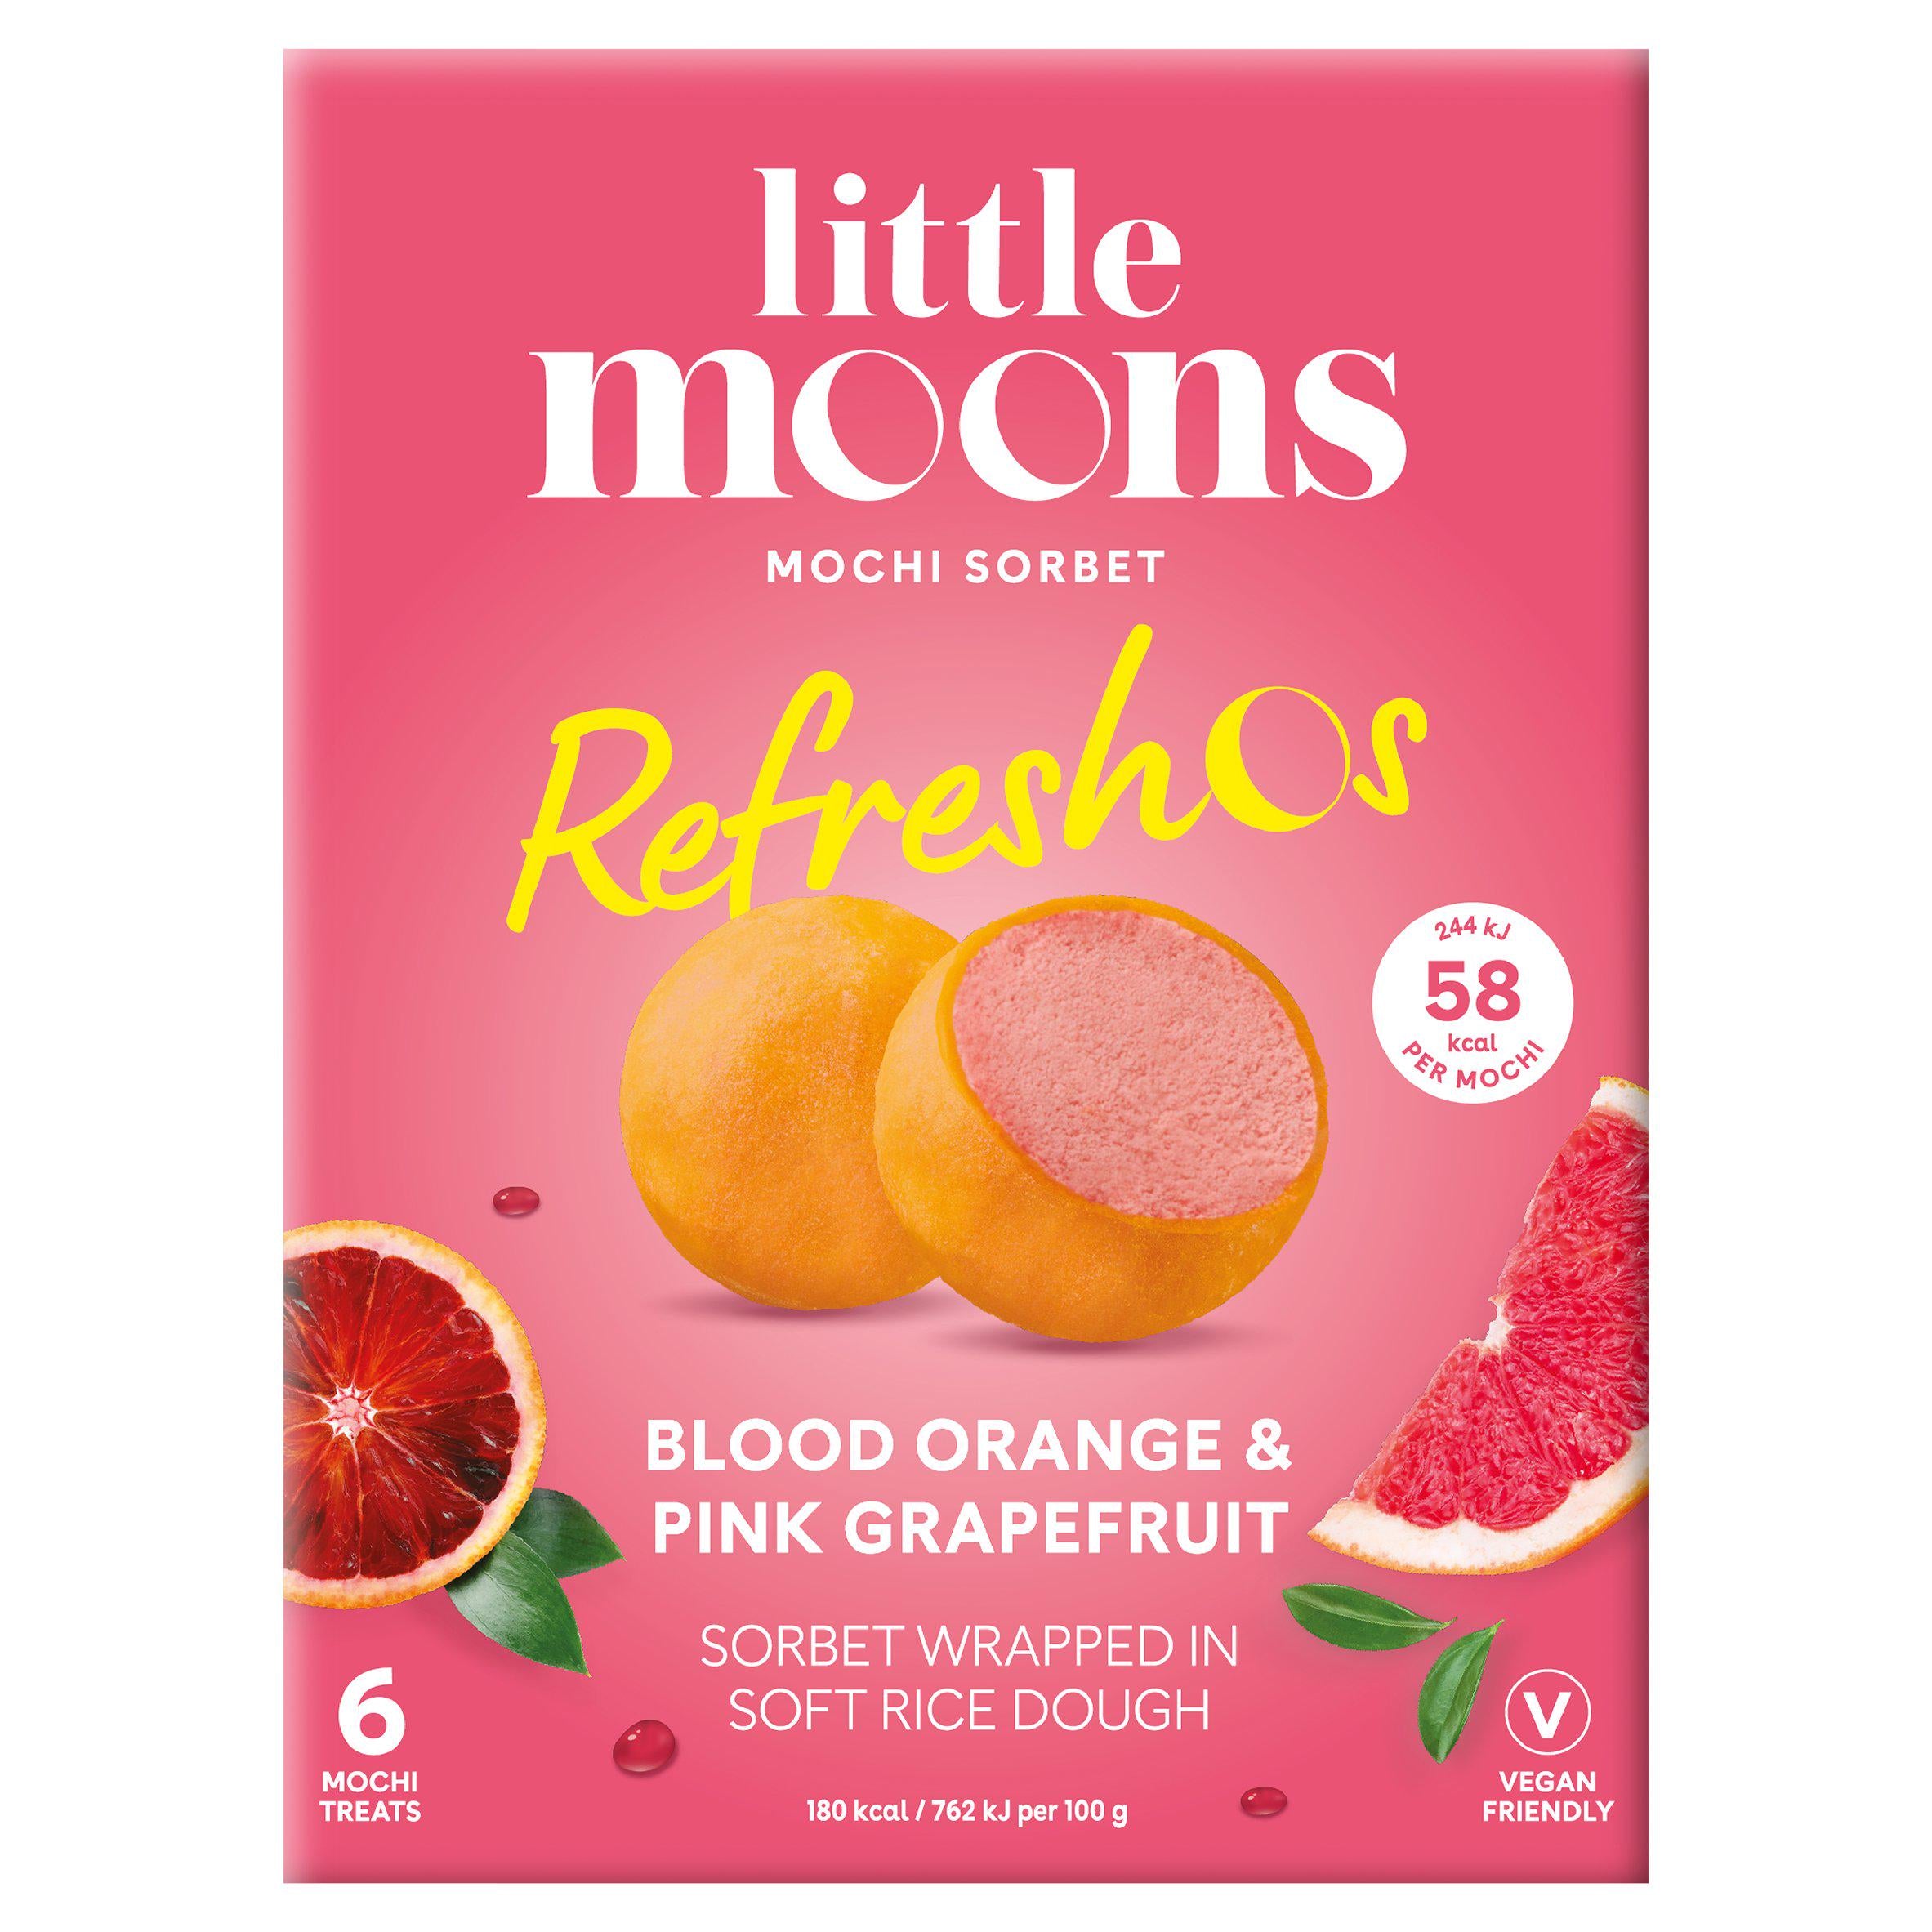 Little Moons Mochi Sorbet Refreshos Blood Orange & Pink Grapefruit 6x32g GOODS Sainsburys   